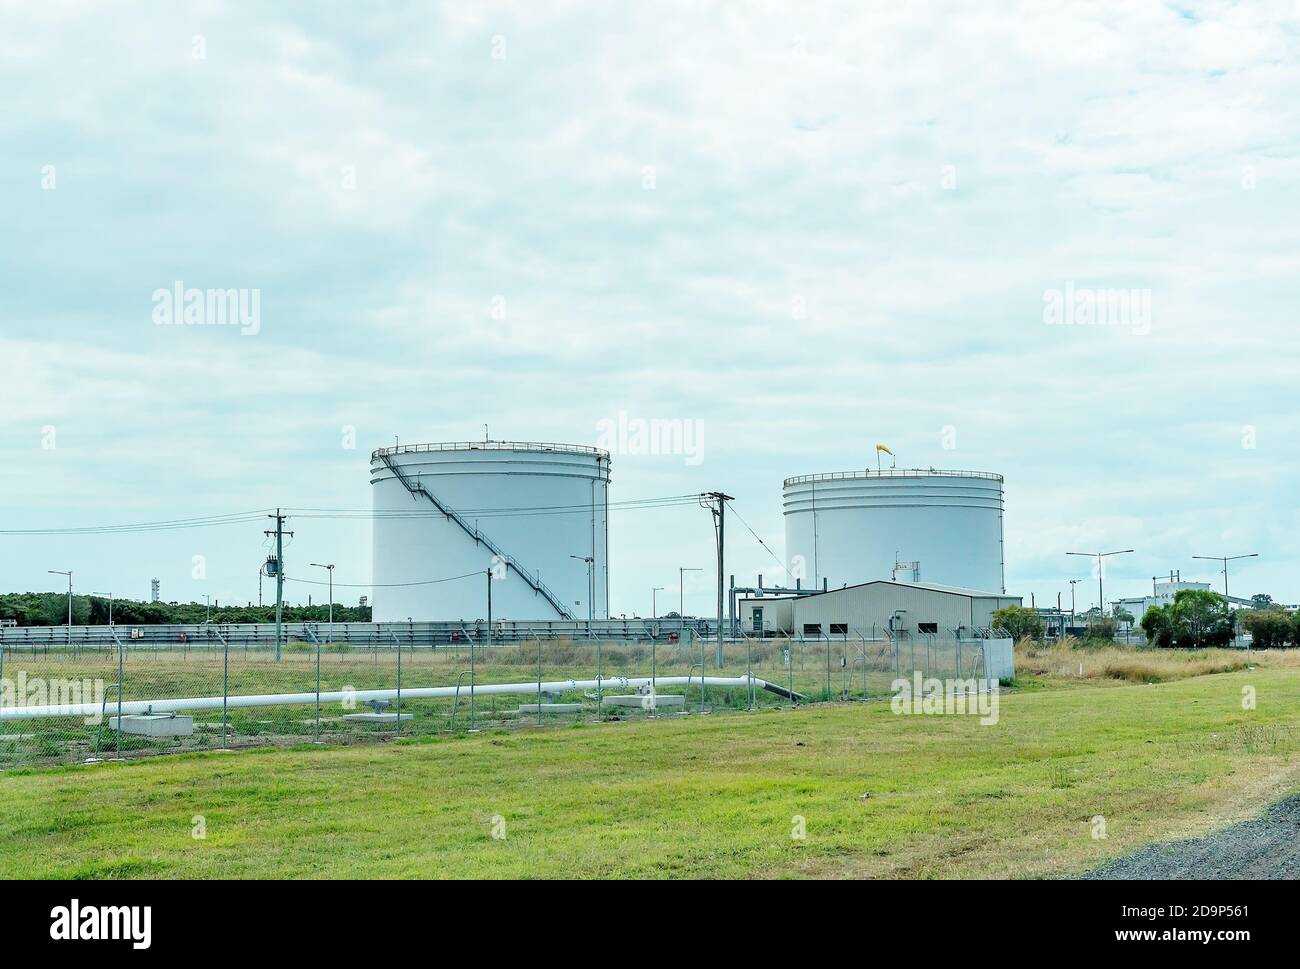 Brisbane, Queensland, Australia - 26th September 2019: Storage tanks in an industrial area Stock Photo